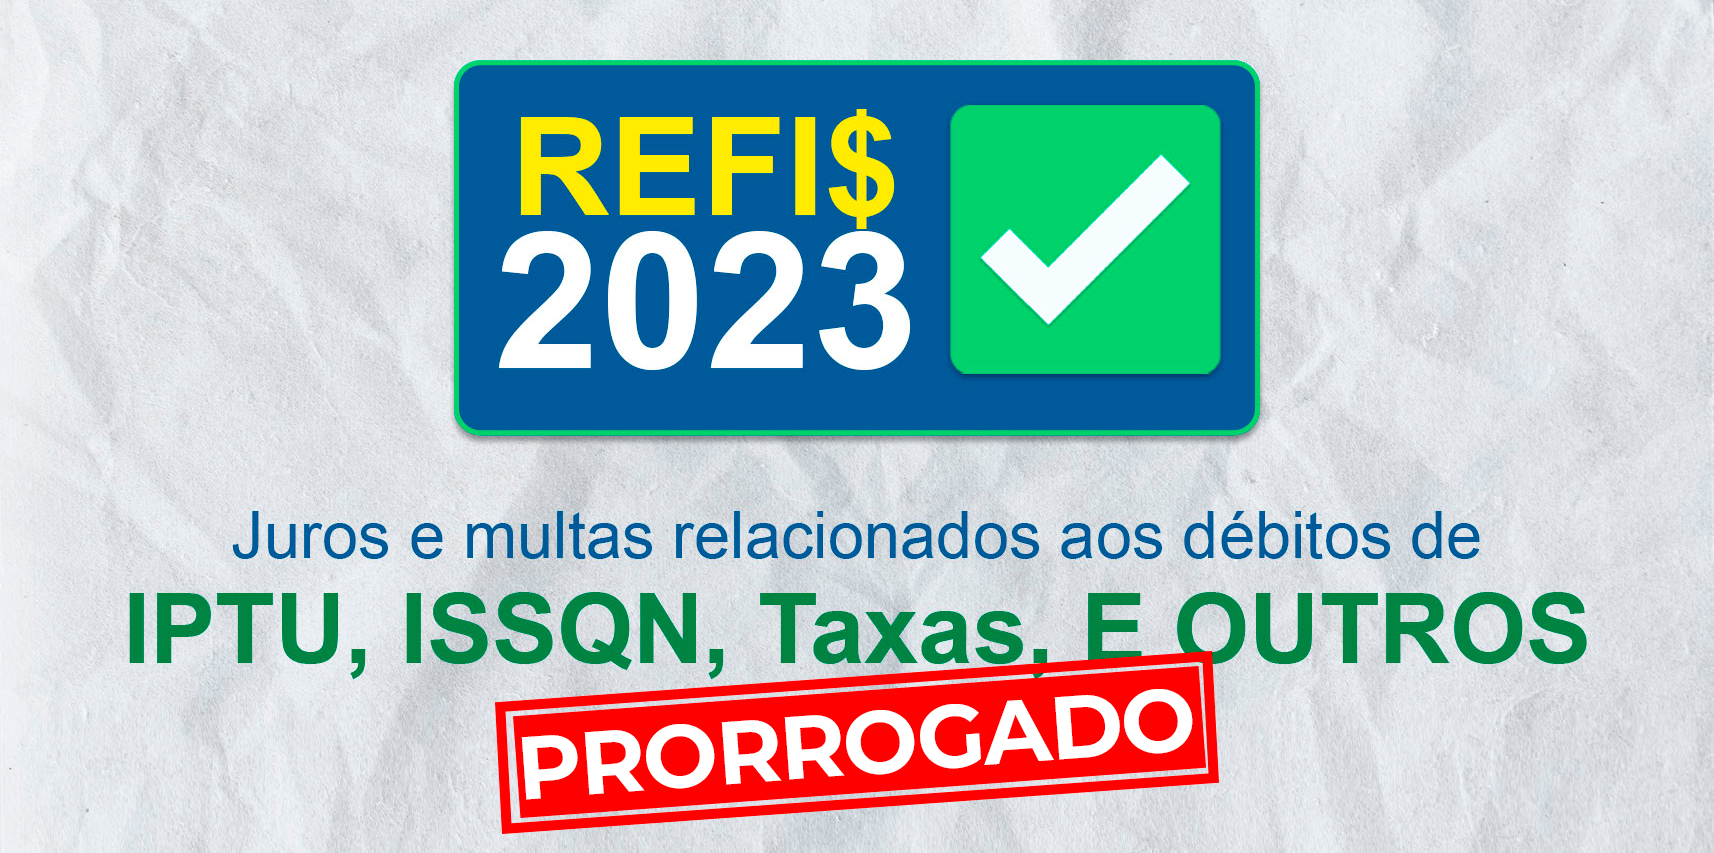 Prefeitura de Vargem Alta prorroga REFIS 2023